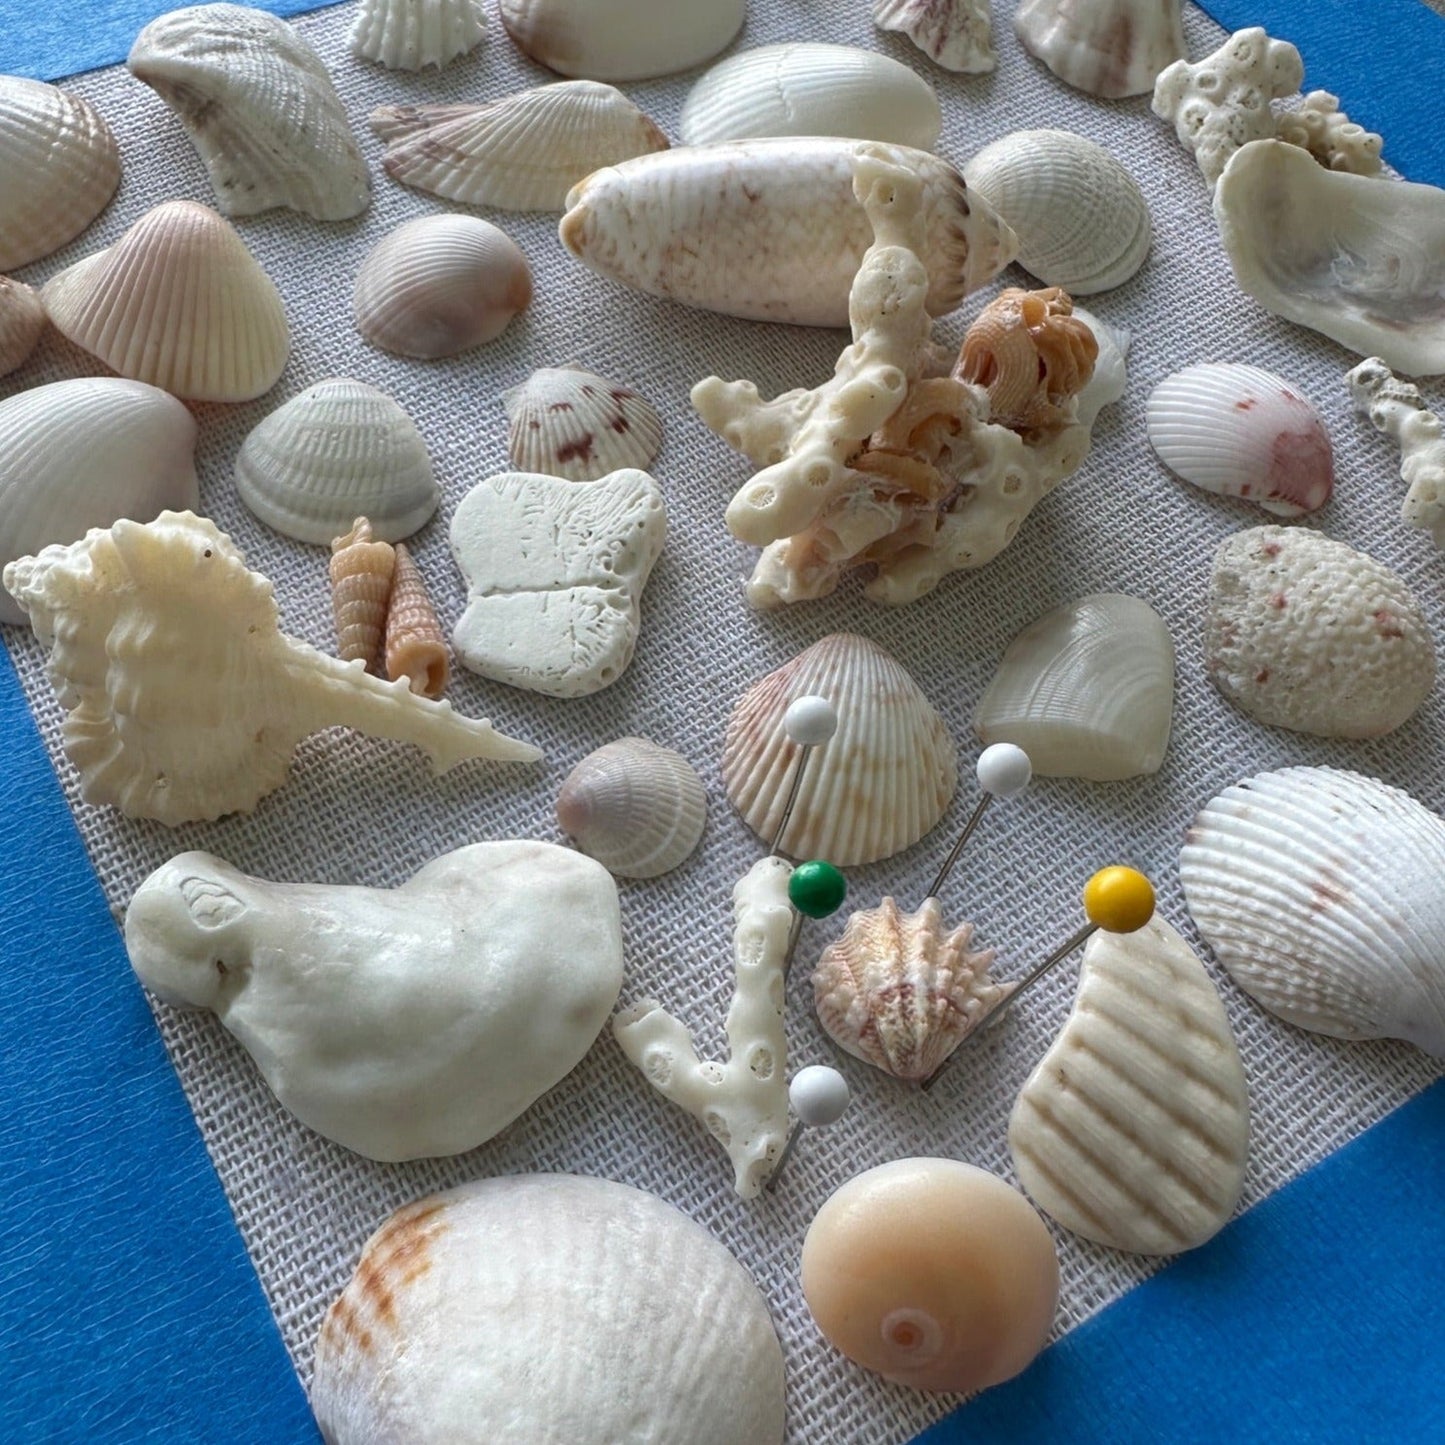 Seashell Art Coral & Pottery - White Shadow Box 8x8